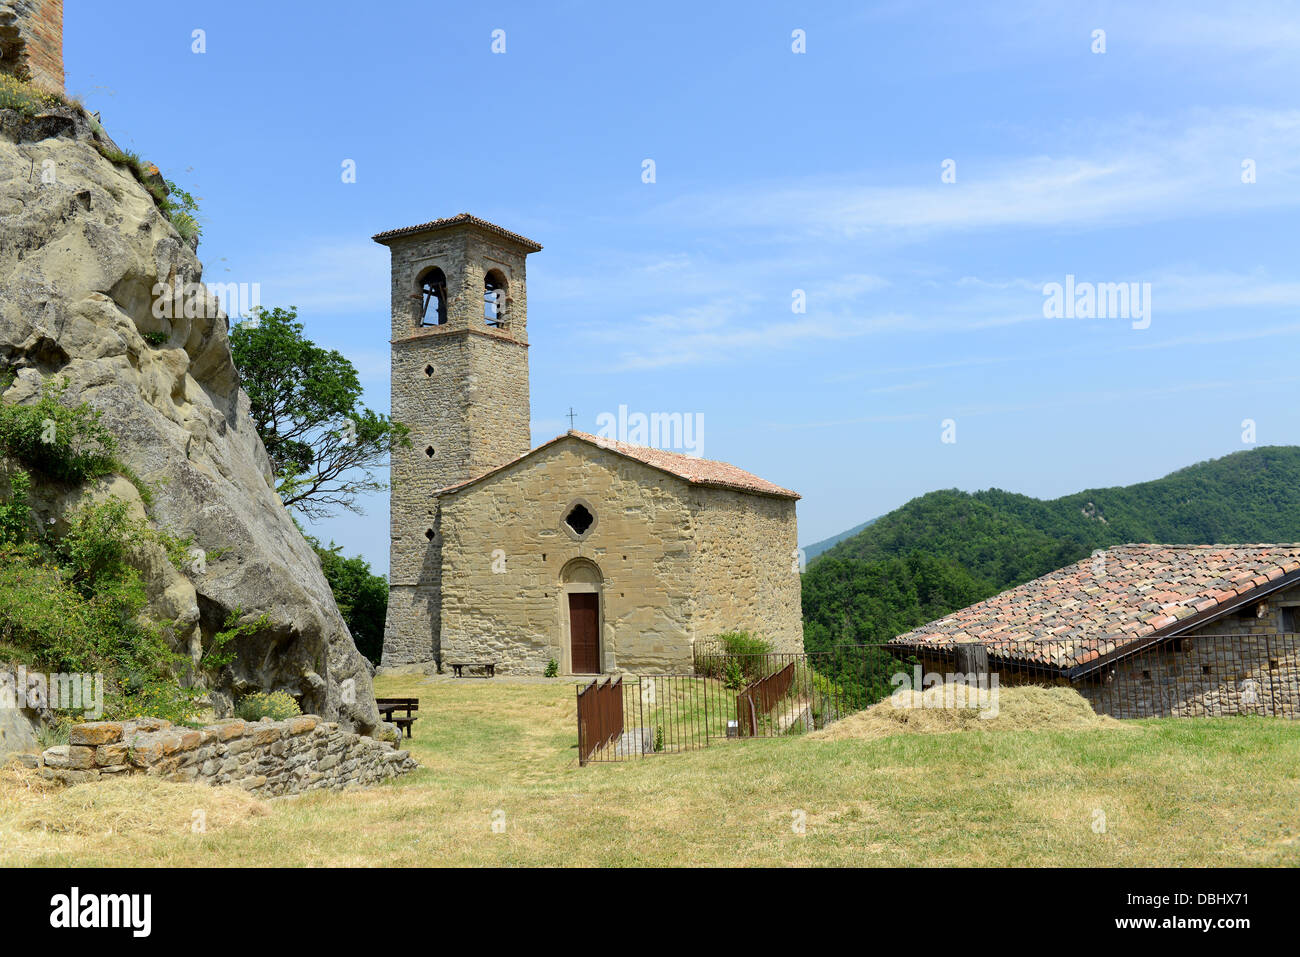 Rural church at Carpineti Castle on the Matilde di Canossa walks in Reggio Emilia hills in the Italian region Emilia-Romagna Stock Photo